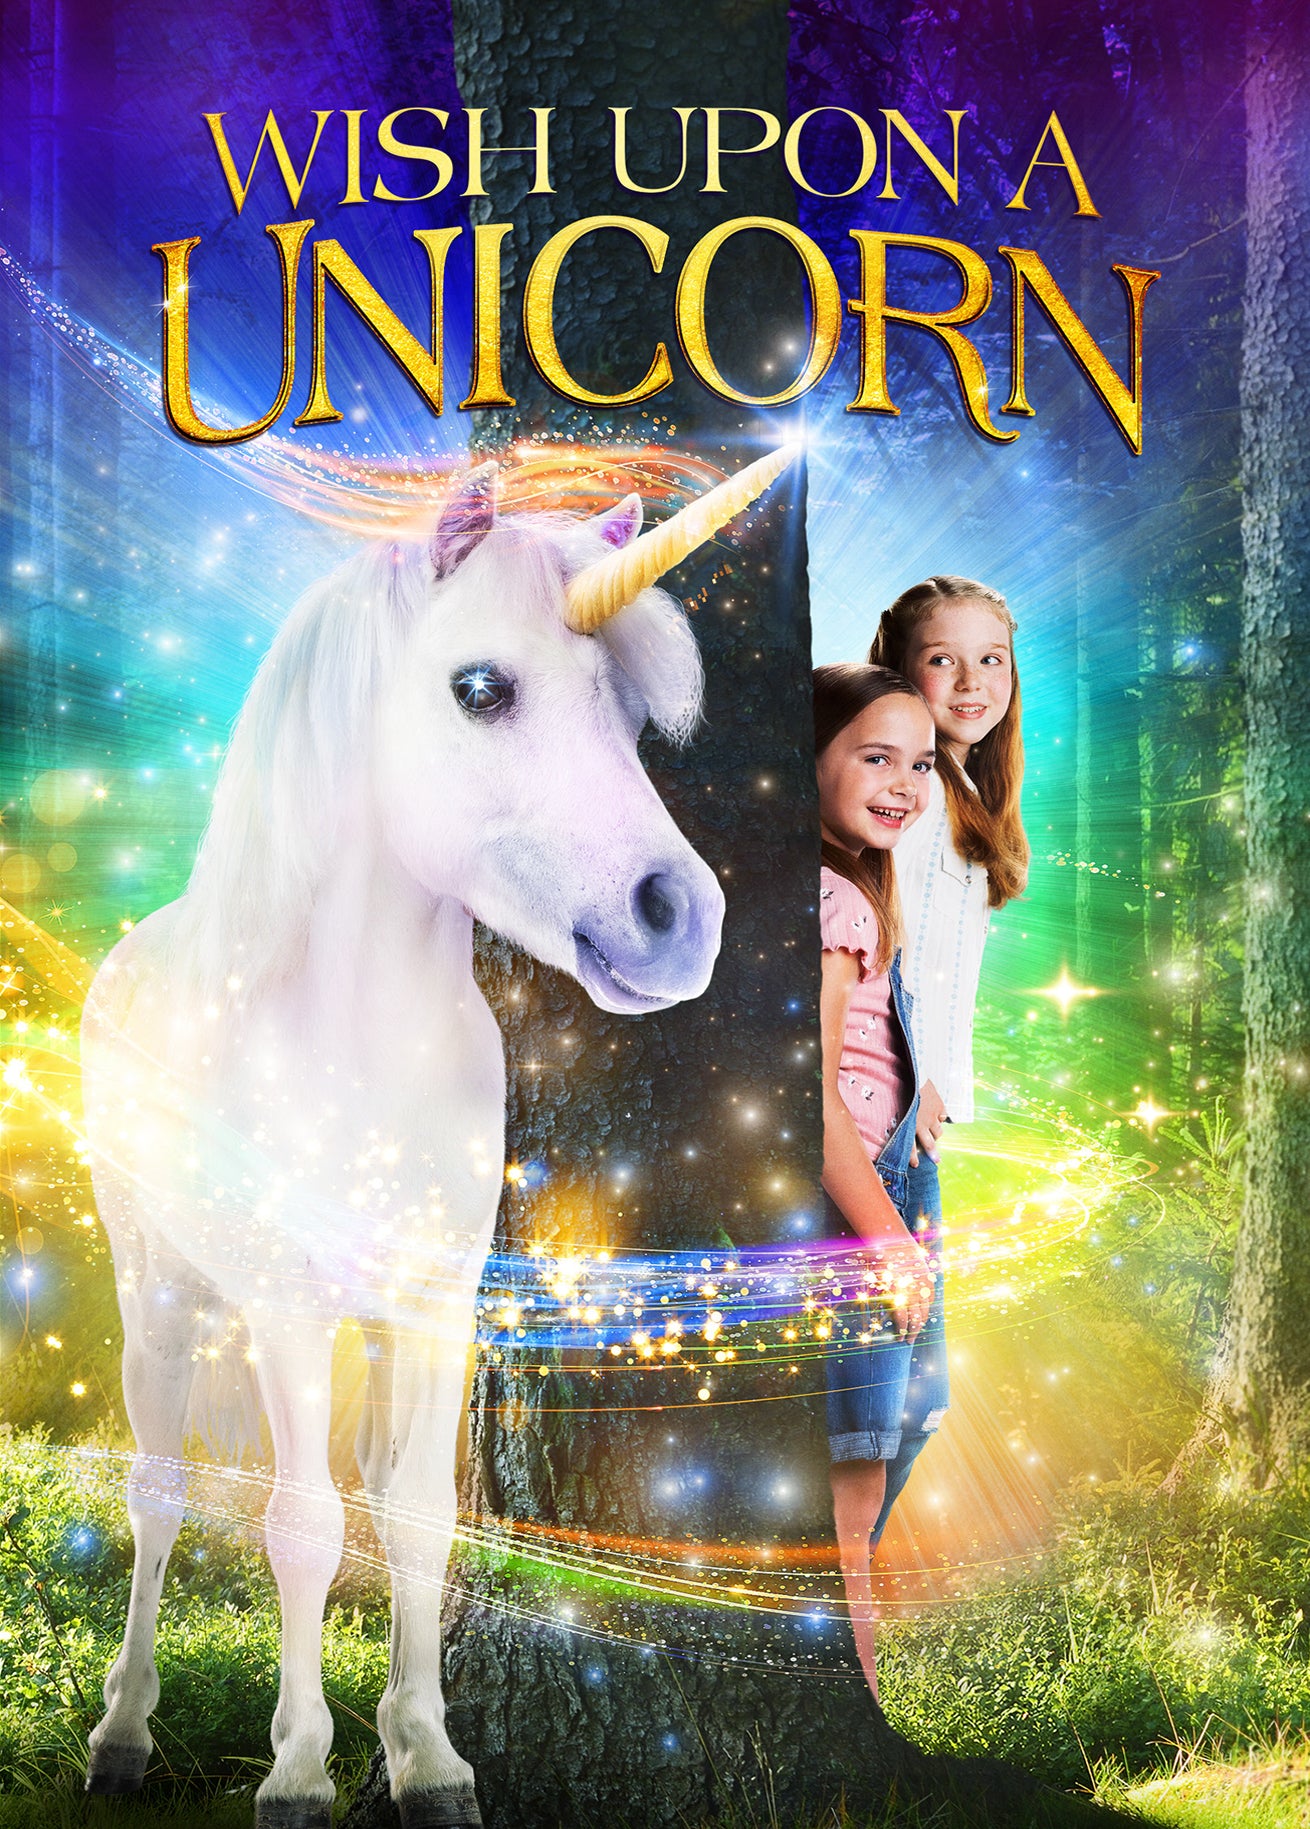 Wish Upon a Unicorn cover art